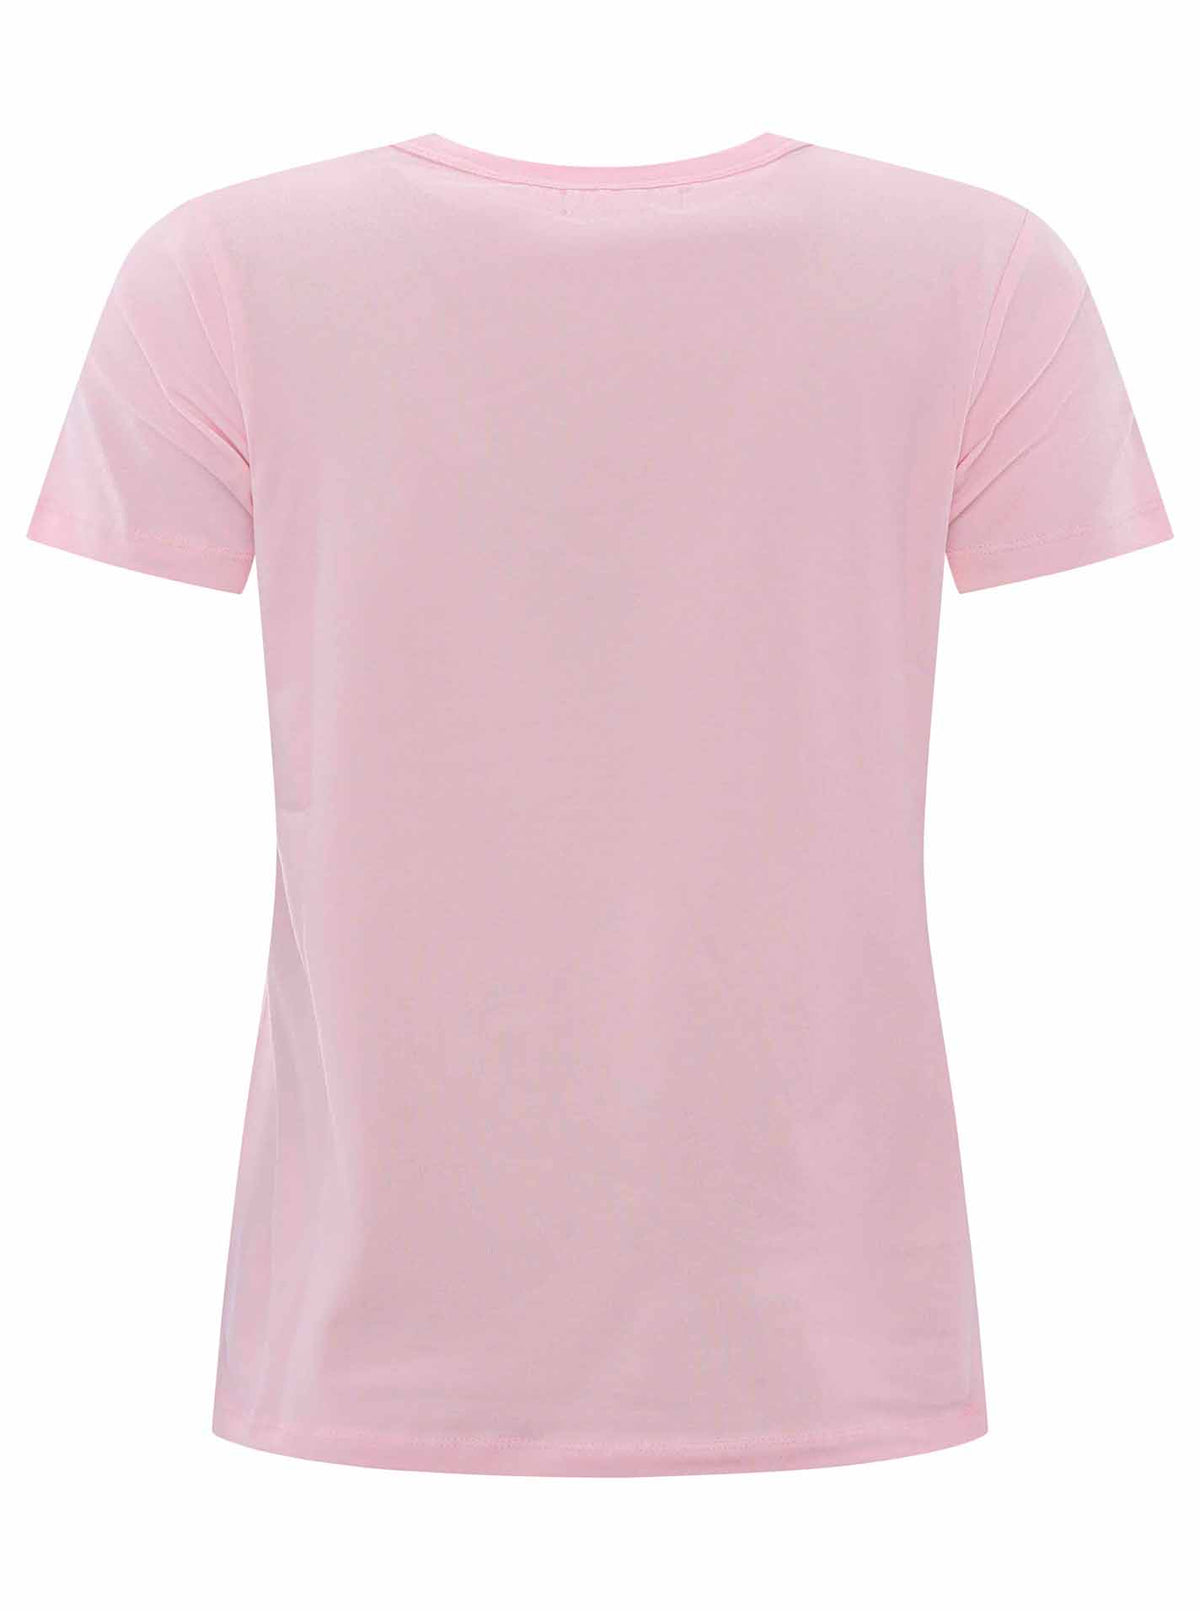 Zwillingsherz - Moin T-Shirt - Rosa/Pink